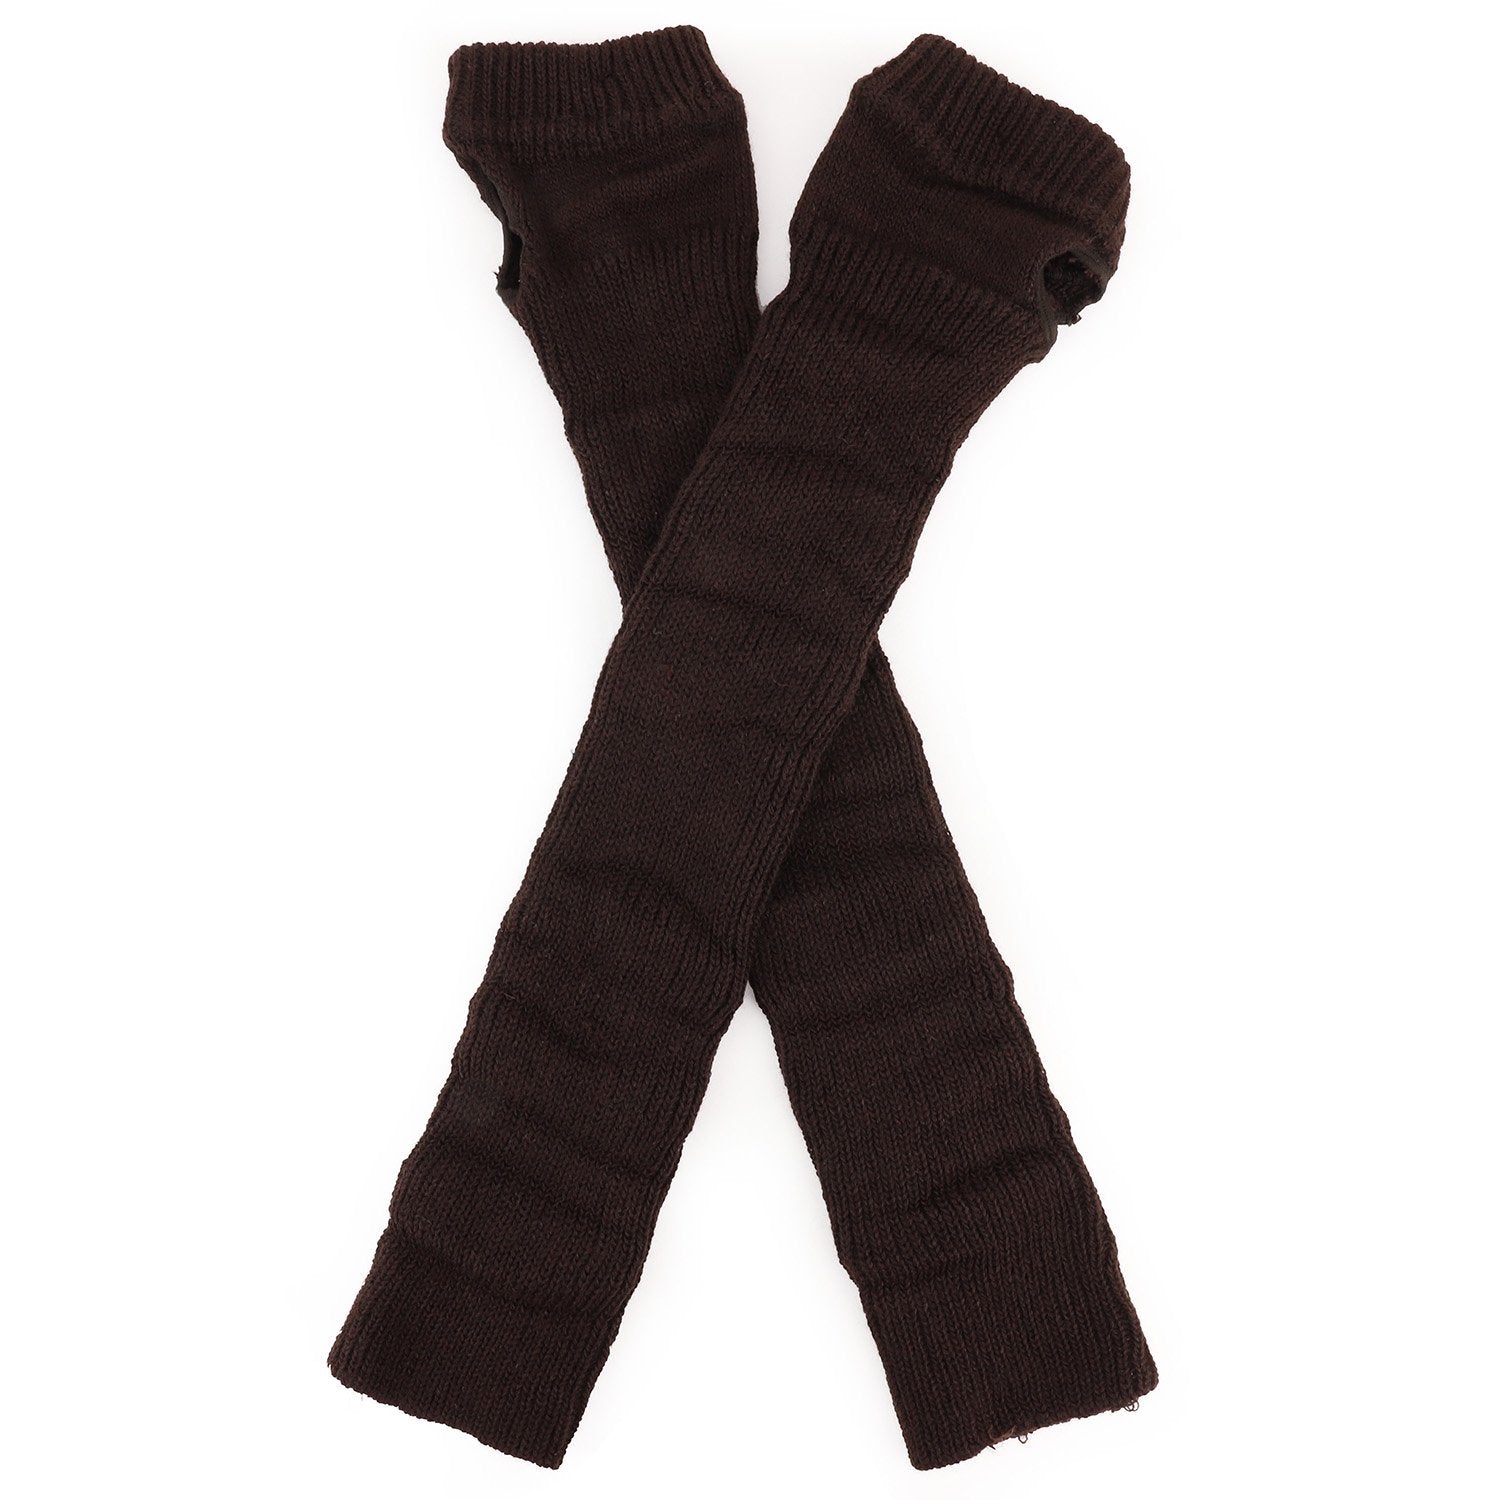 Armycrew Women's Knit Winter Fingerless Thumb Hole Long Arm Warmer